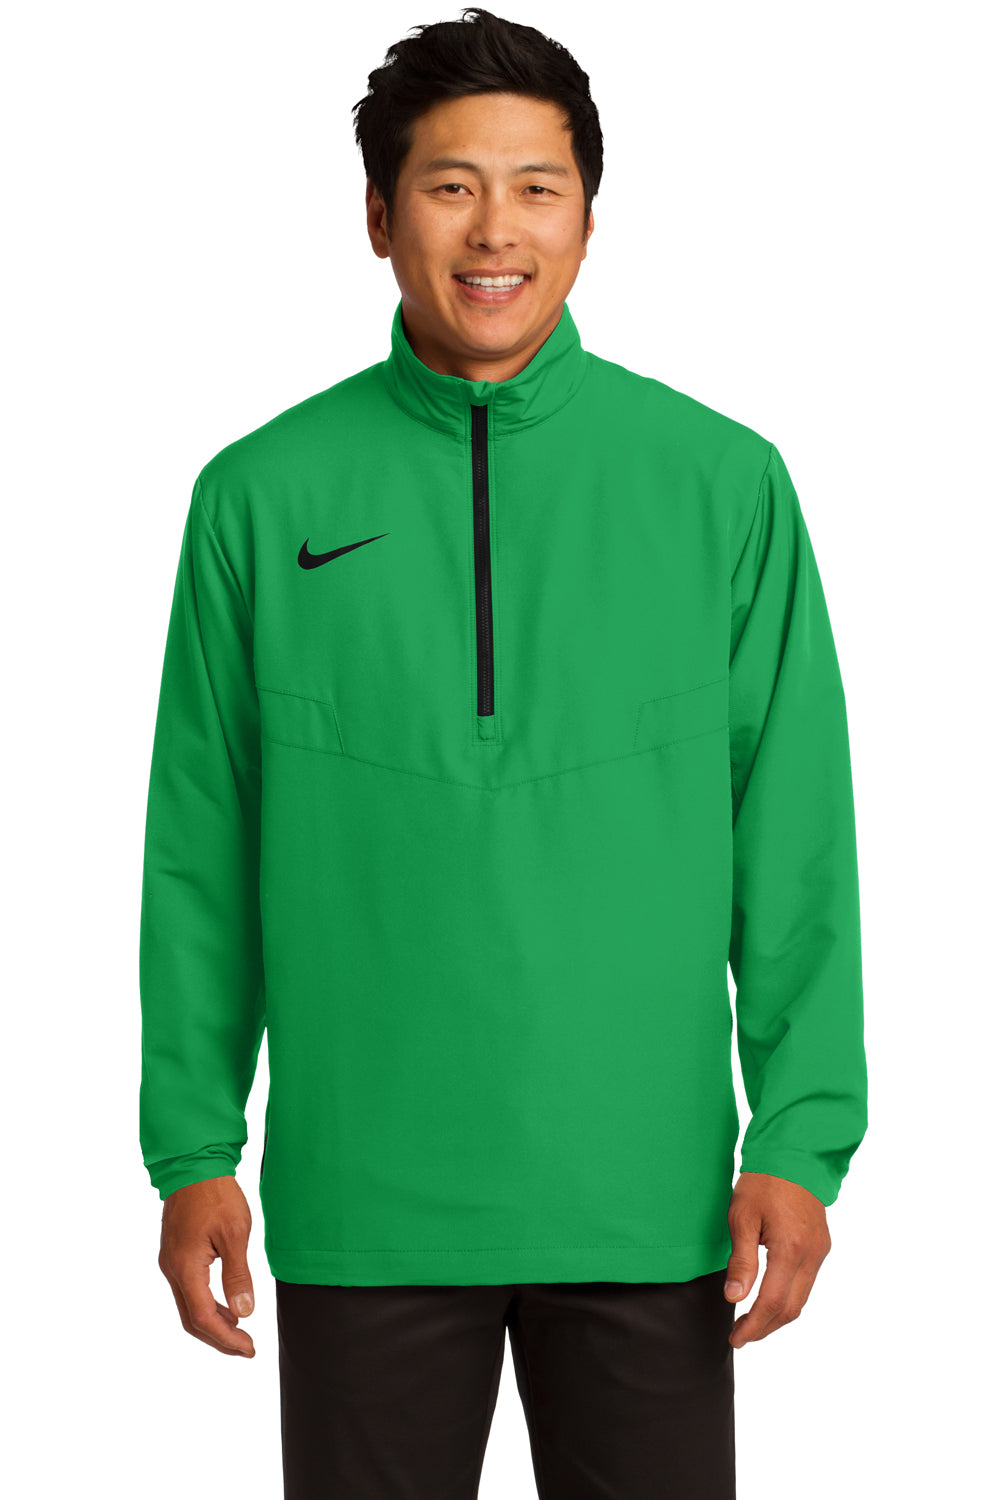 Nike 578675 Mens 1/4 Zip Wind Jacket Lucky Green Front